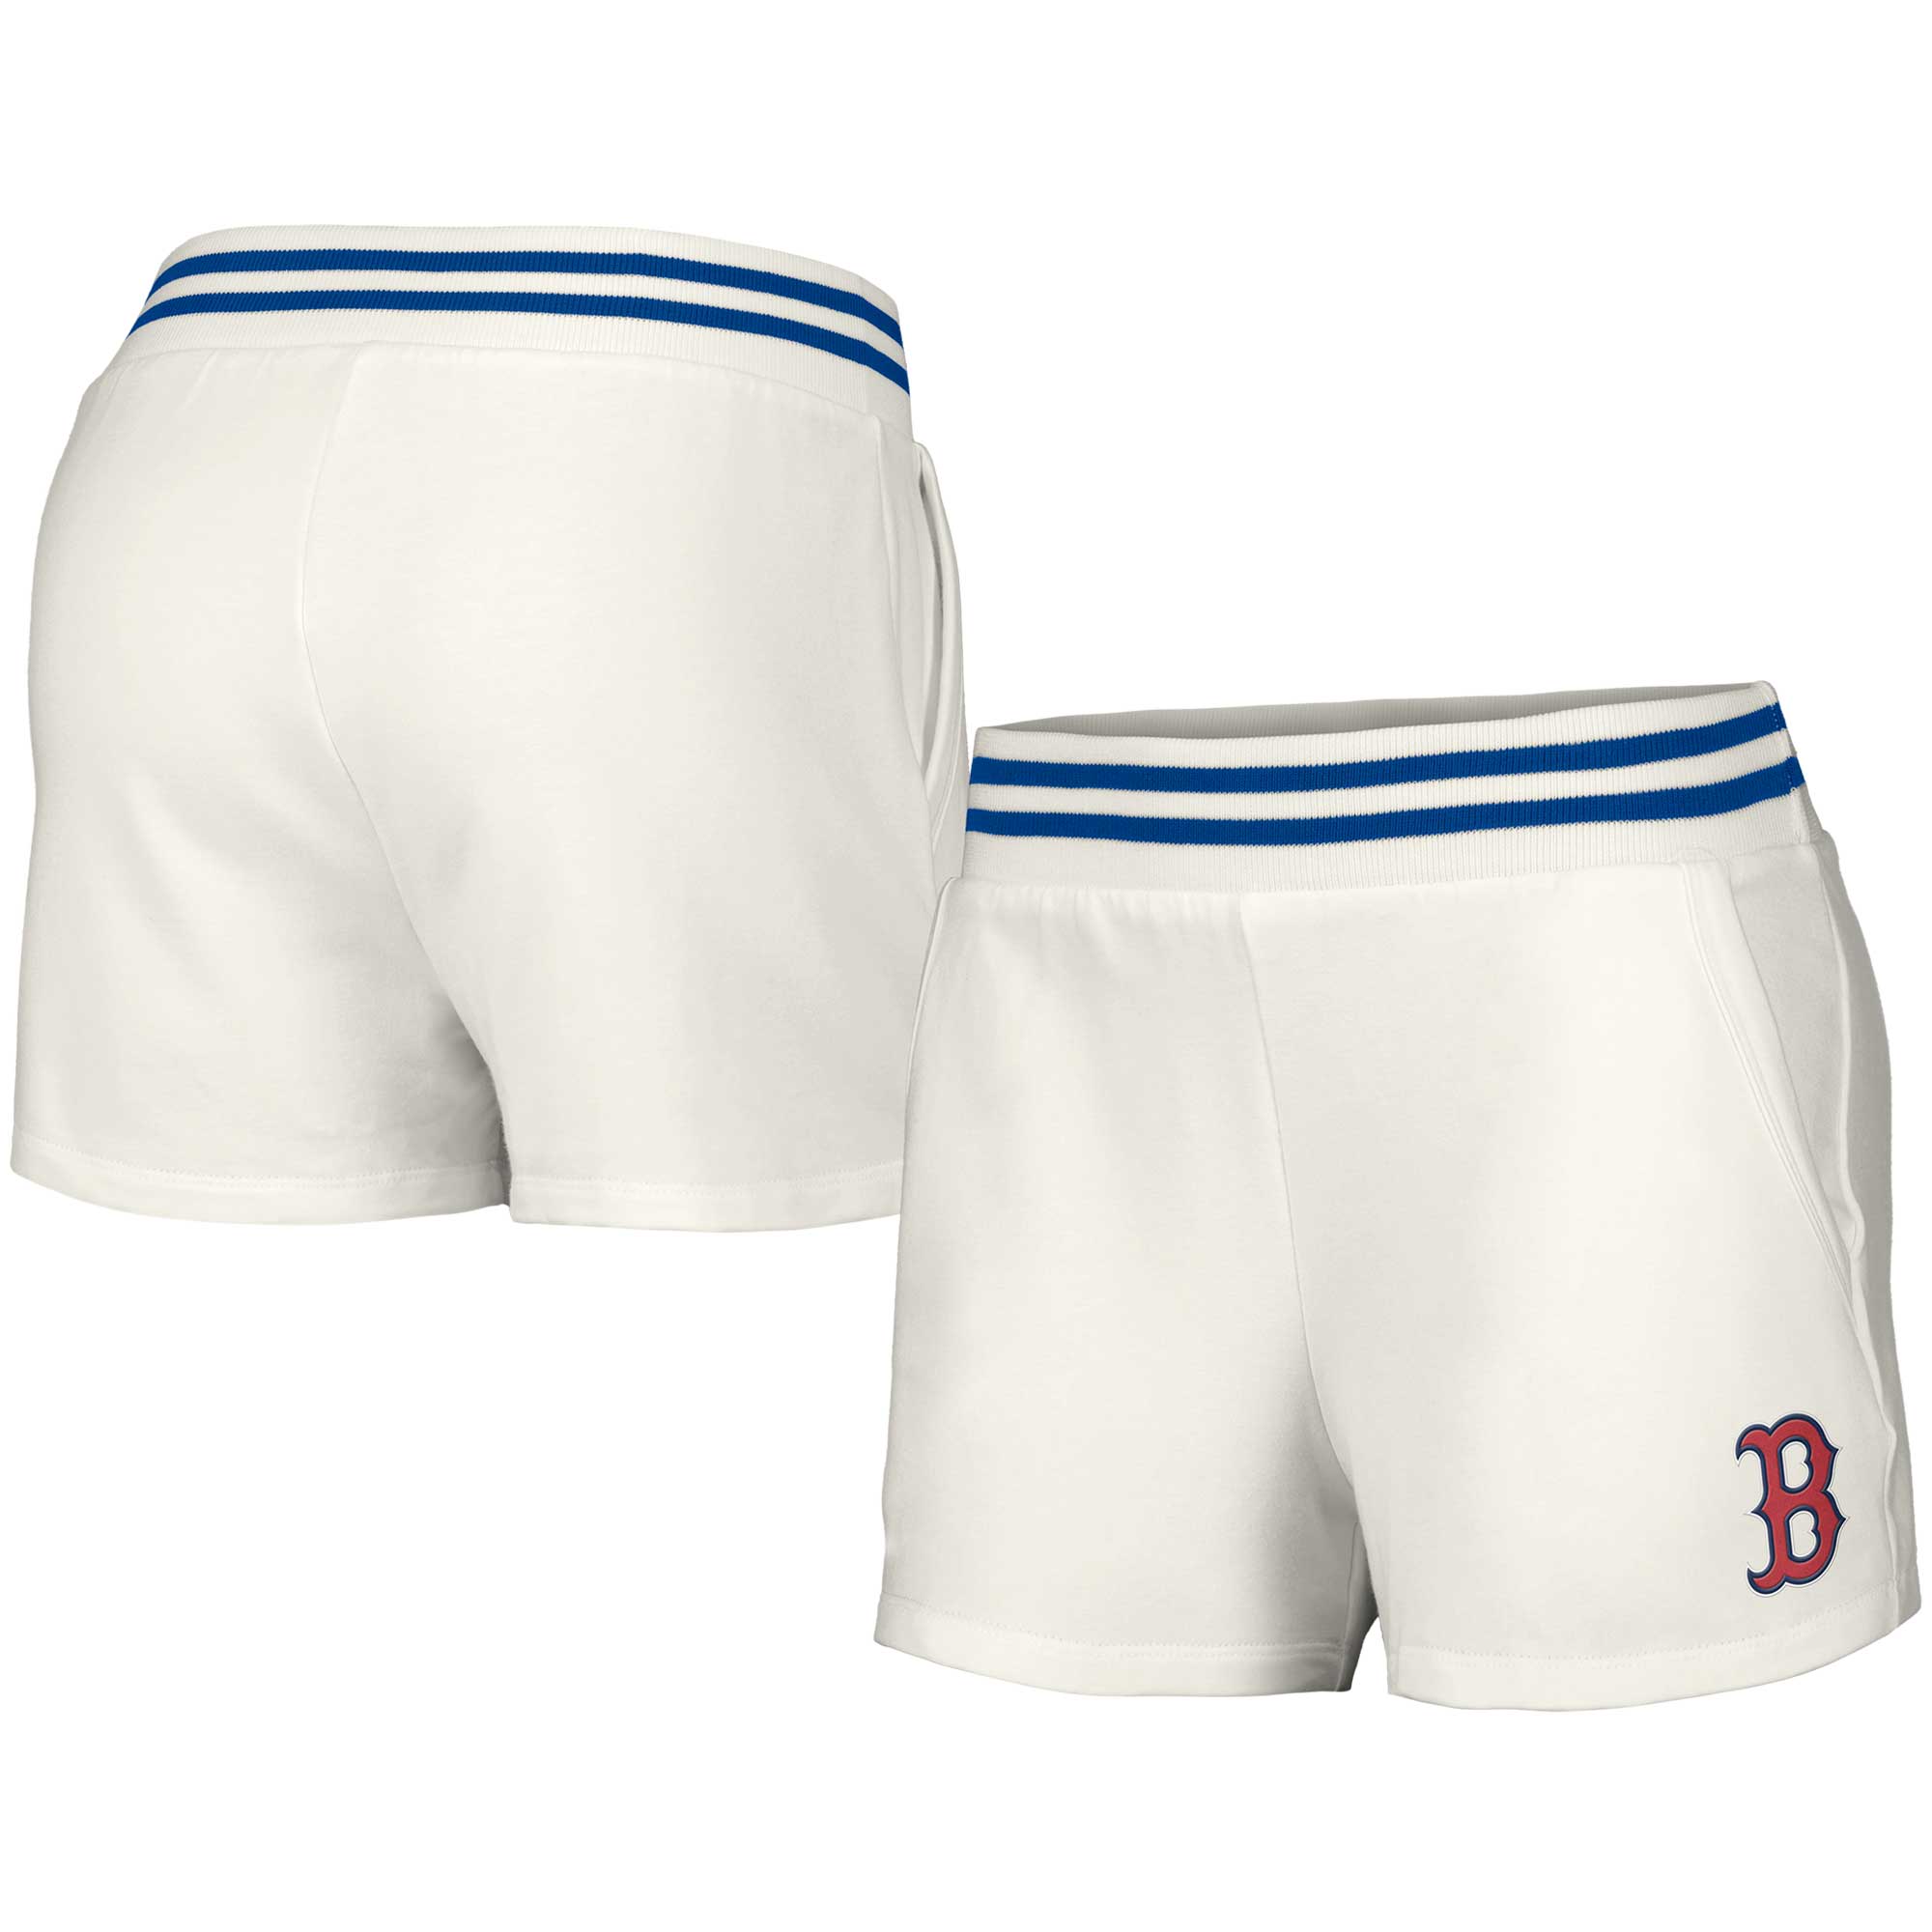 Lusso Red Sox Maeg Pocket Shorts - Women's